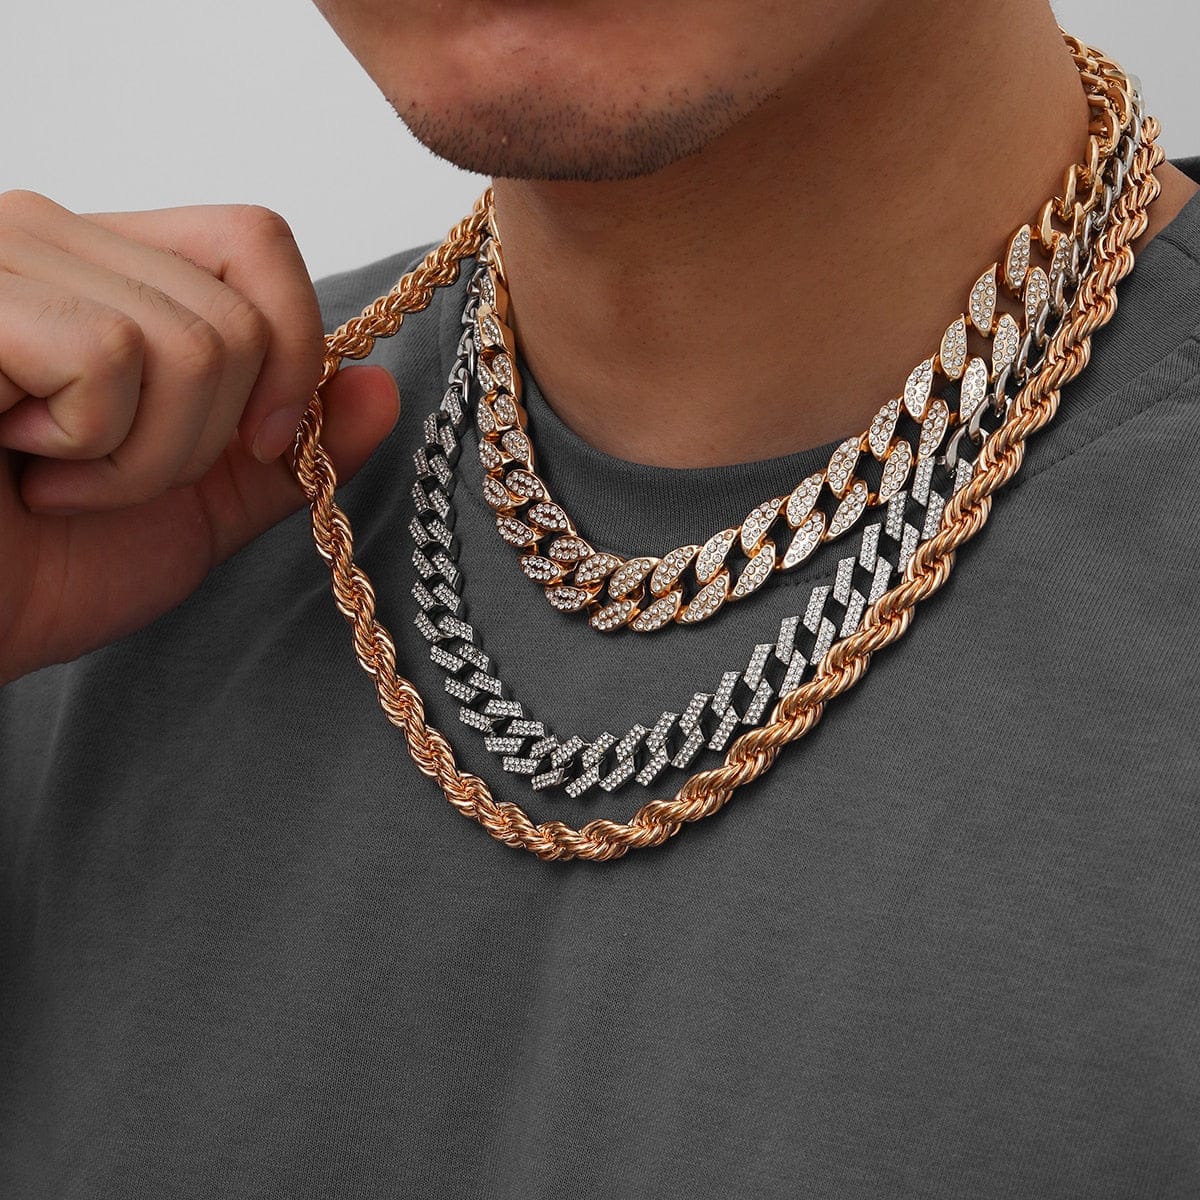 VVS Jewelry hip hop jewelry VVS Jewelry Choker Cuban + Rope Chain Layered bundle